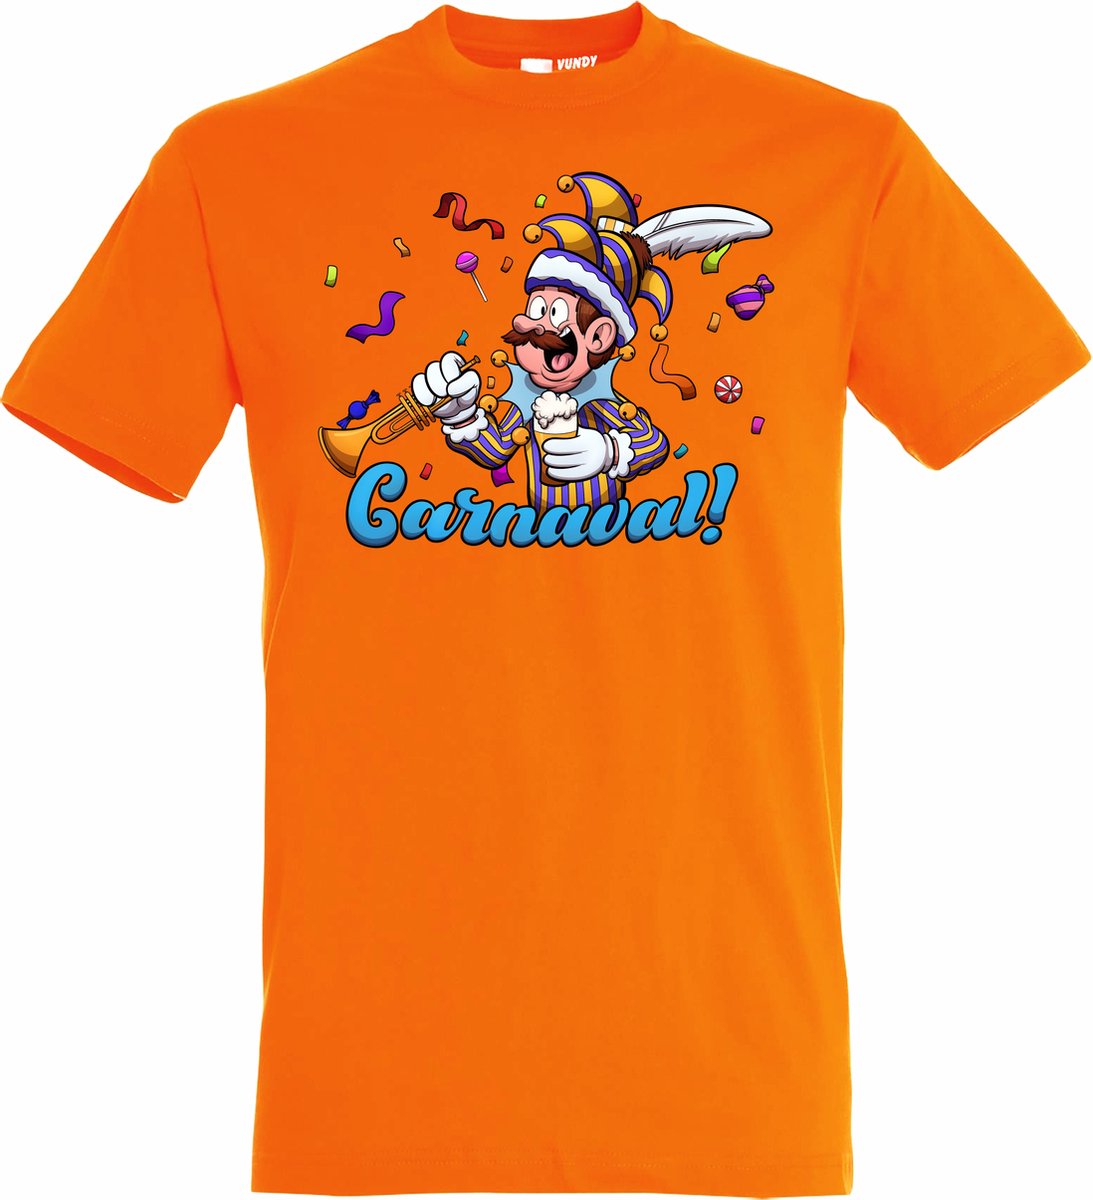 T-shirt kinderen Carnavalluh | Carnaval | Carnavalskleding Kinderen Baby | Oranje | maat 140